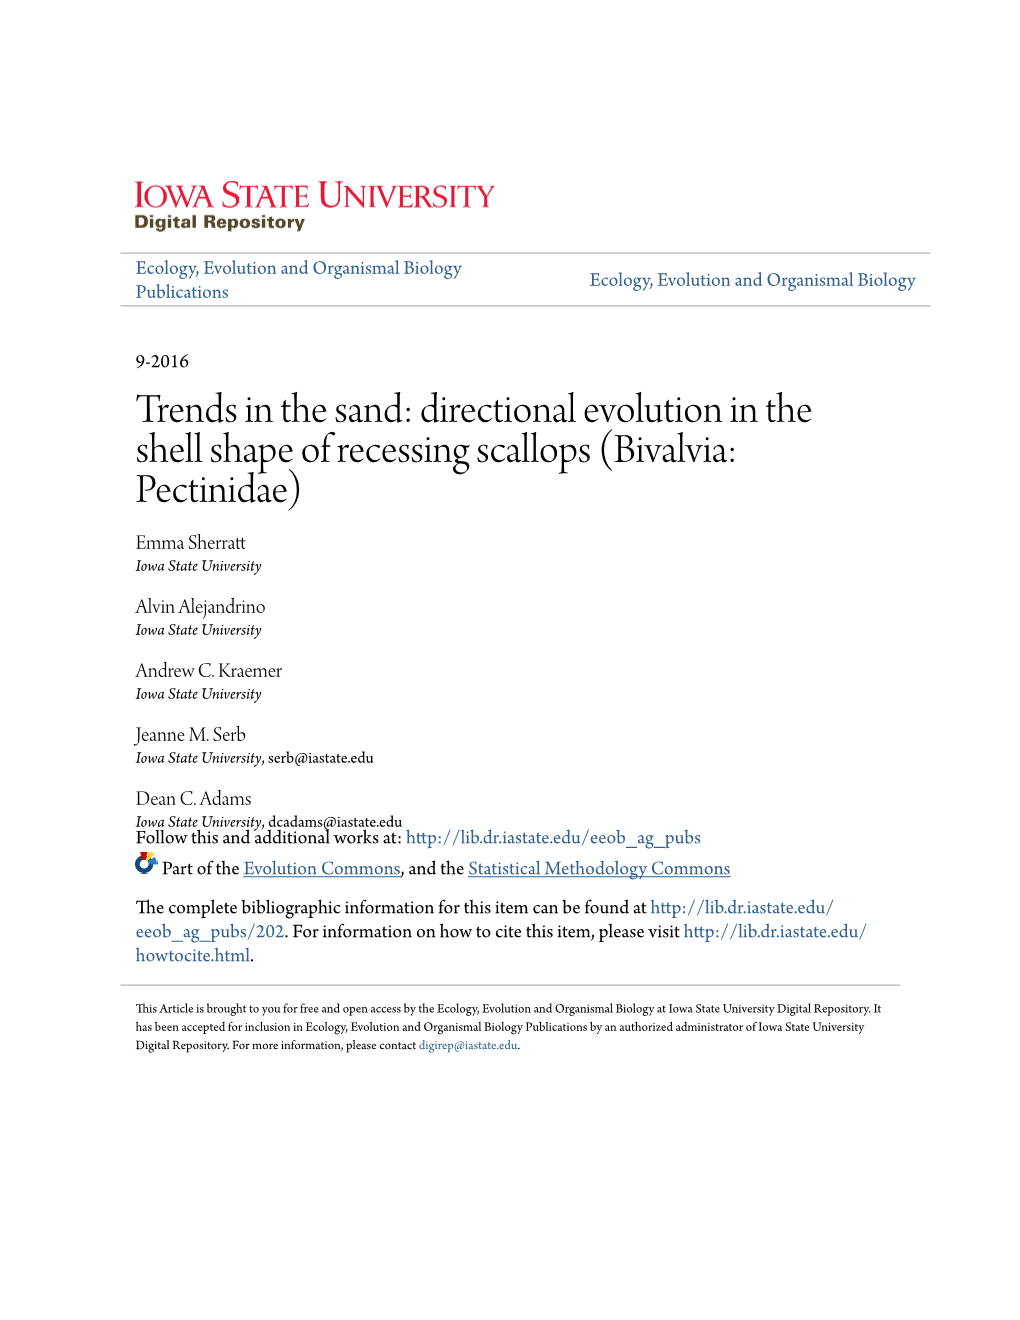 Directional Evolution in the Shell Shape of Recessing Scallops (Bivalvia: Pectinidae) Emma Sherratt Iowa State University